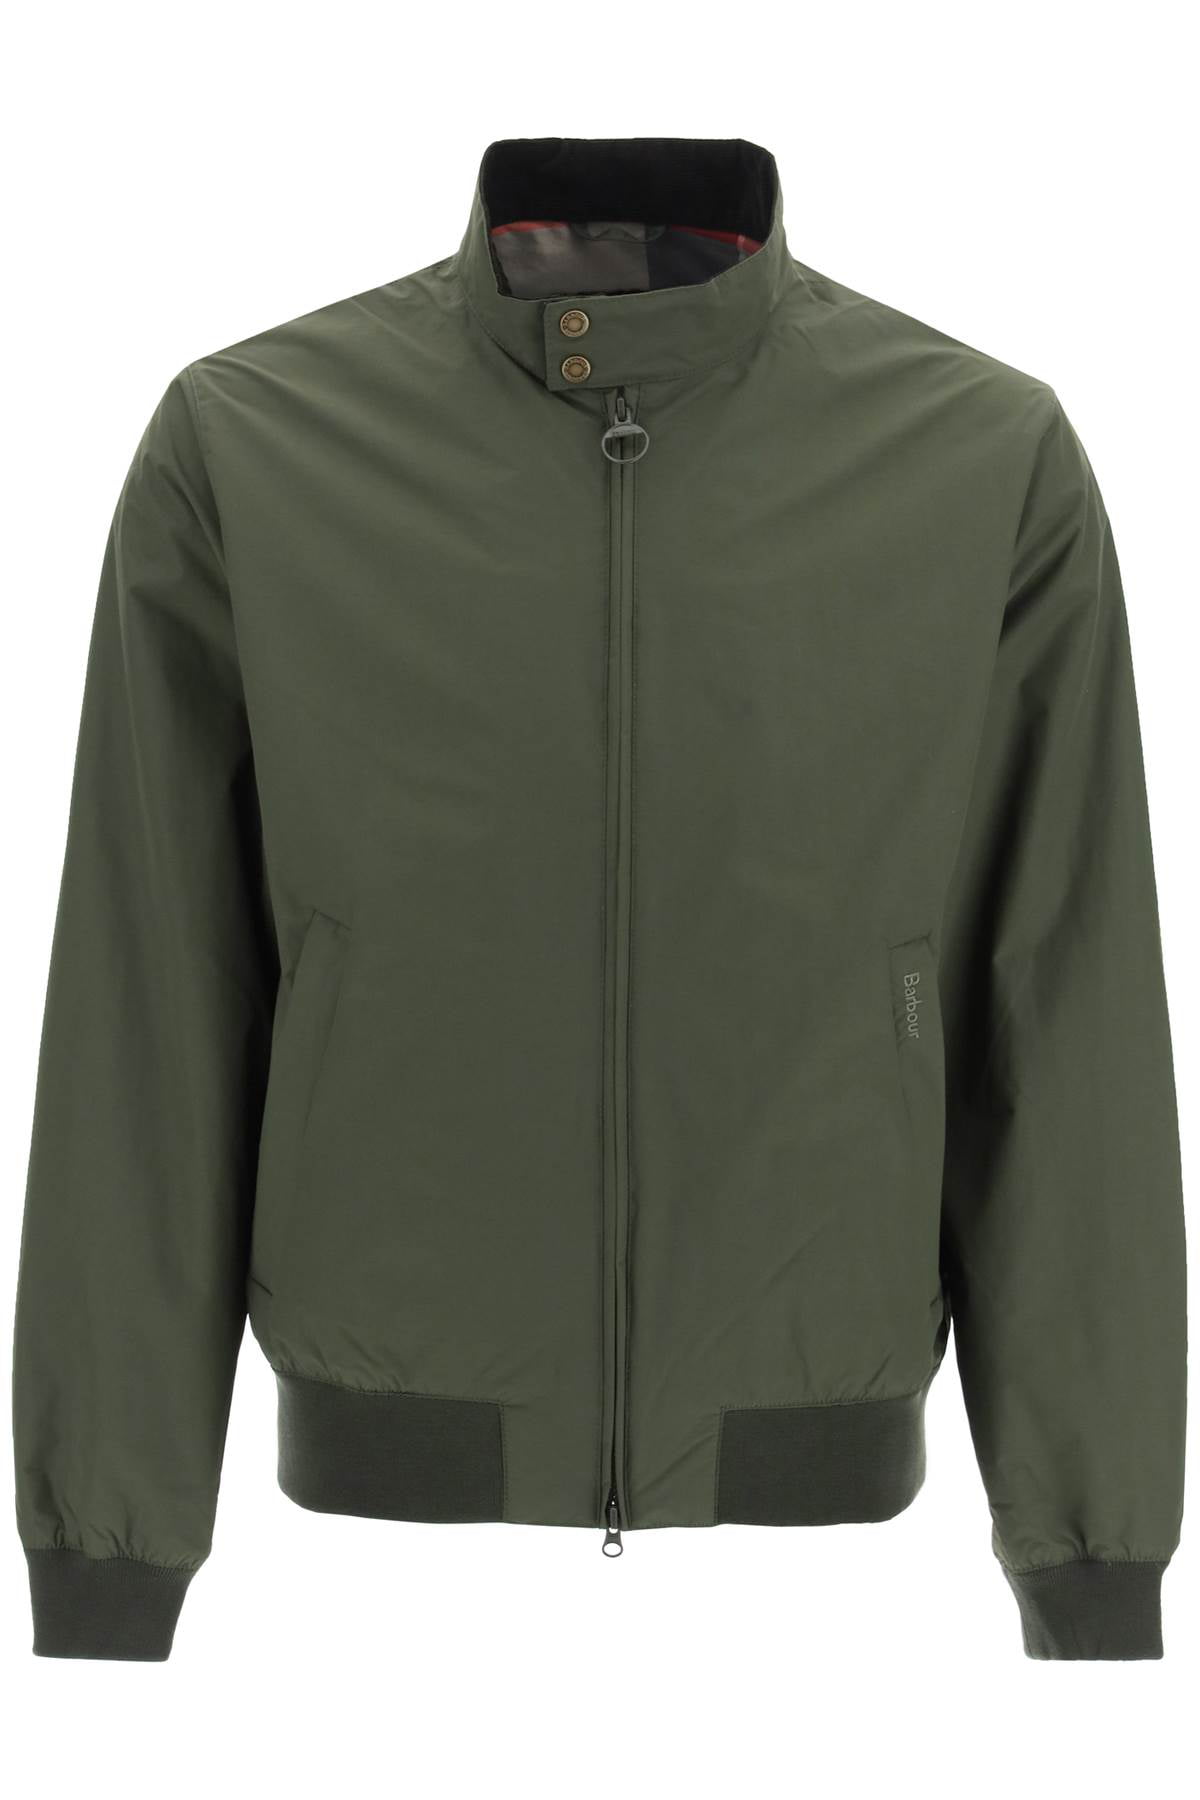 Barbour nylon harrington jacket - Walmart.com